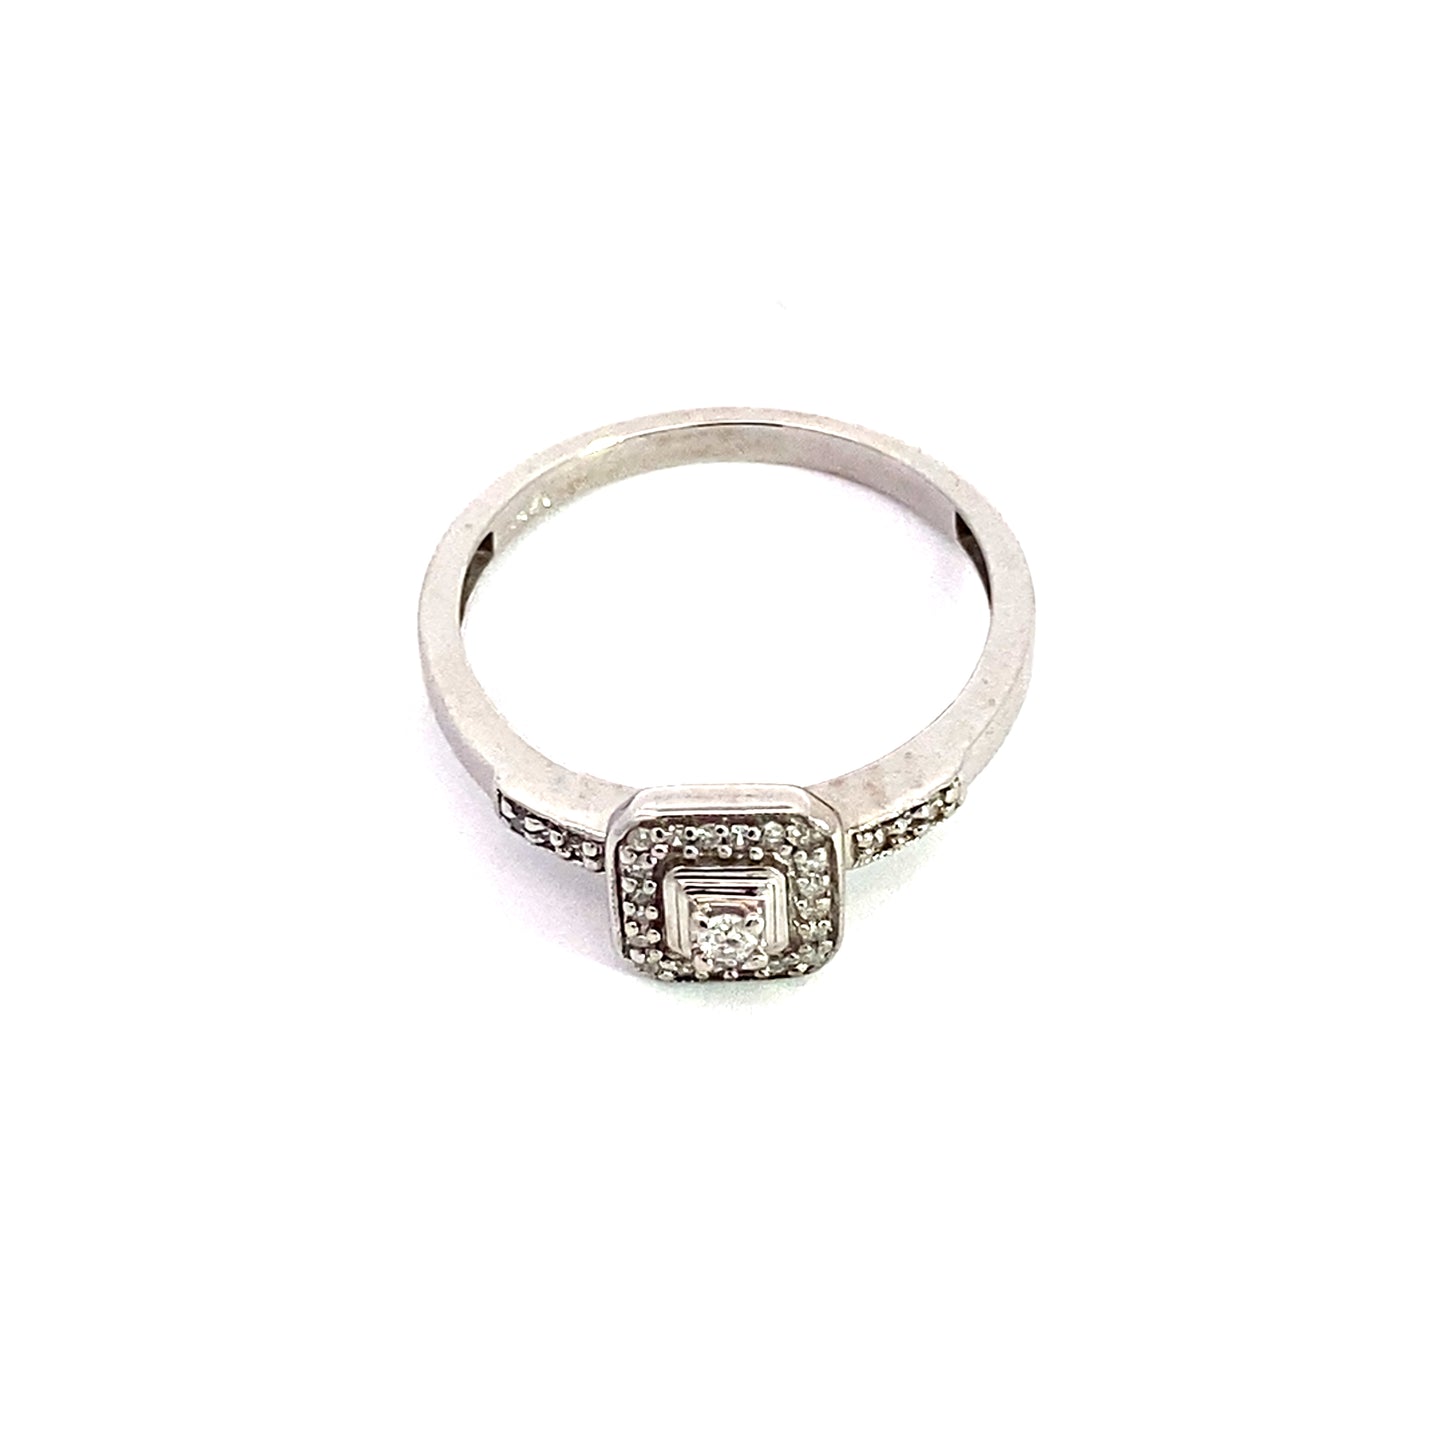 10K White Gold Lds Diamond Engagement Ring Size 7 1.1Dwt